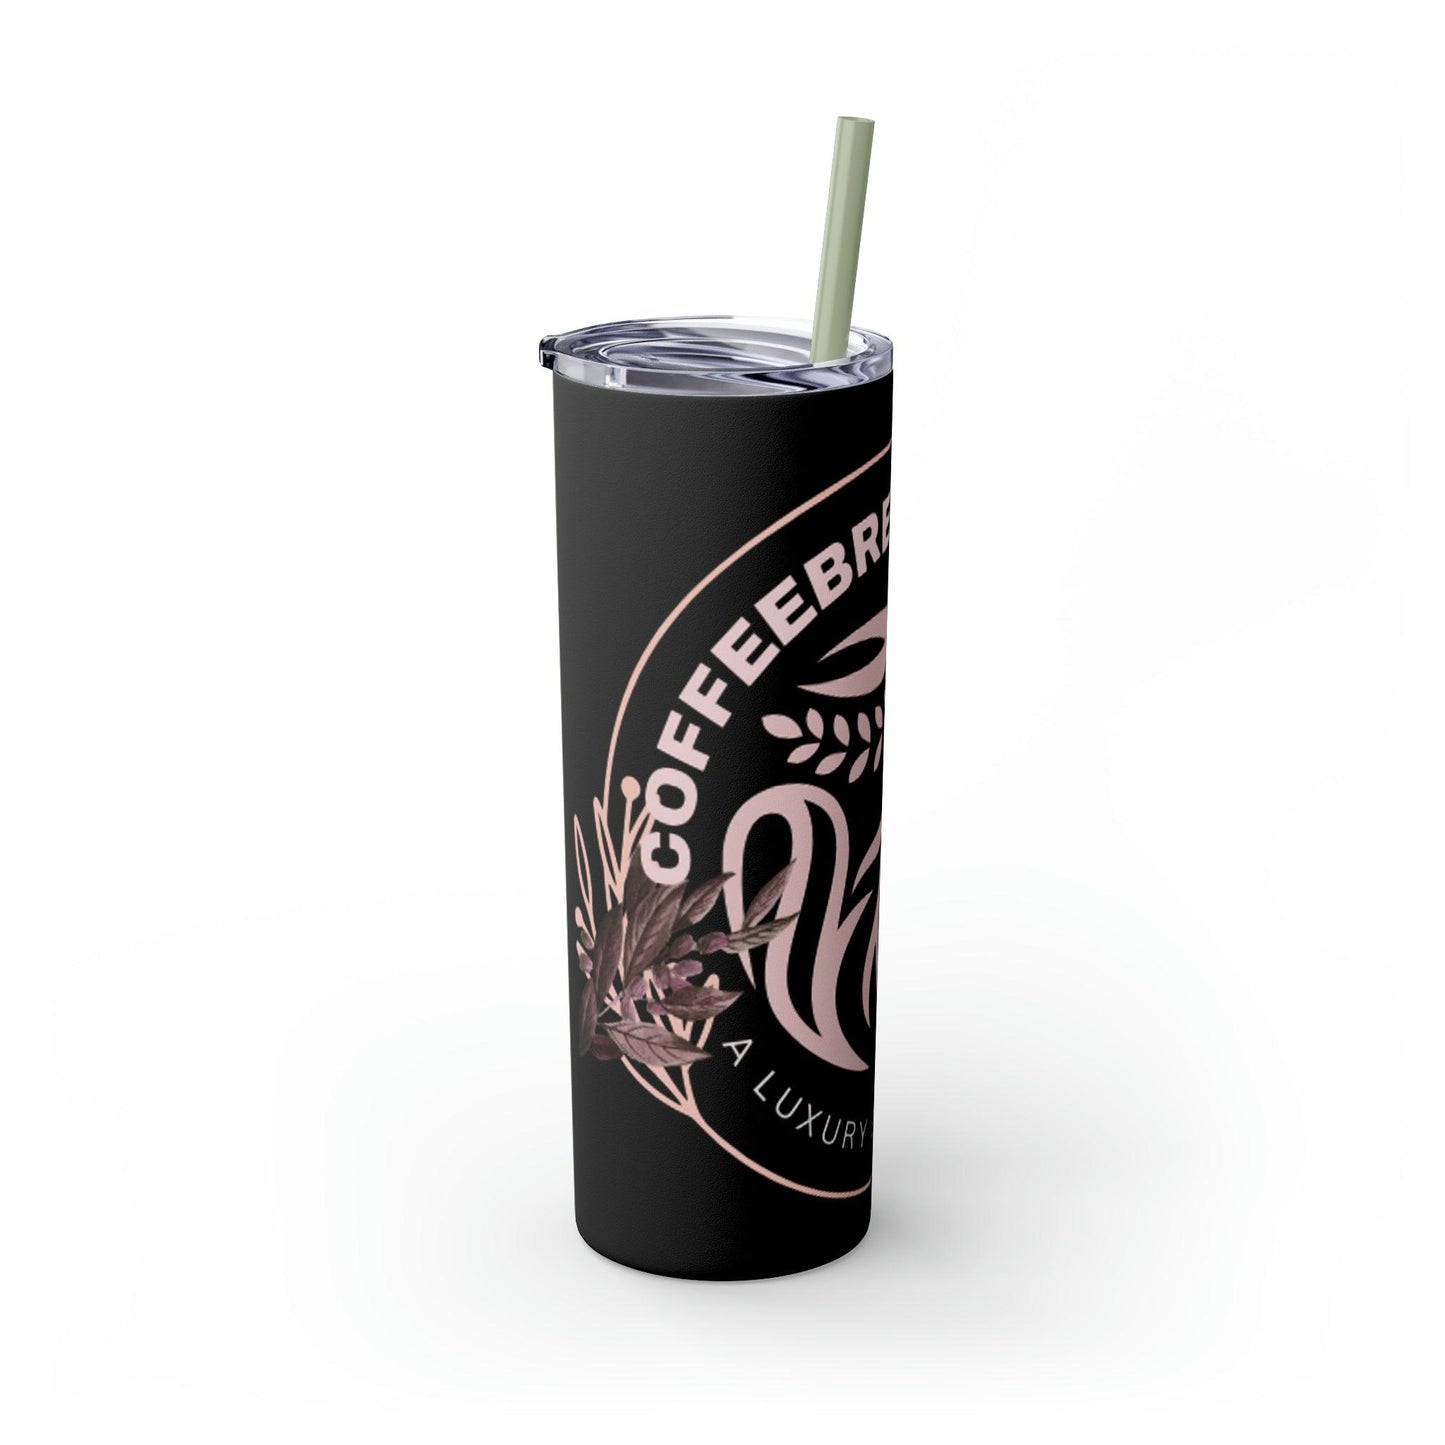 Coffeebre Lifestyle Skinny Tumbler with Straw, 20oz - COFFEEBRE